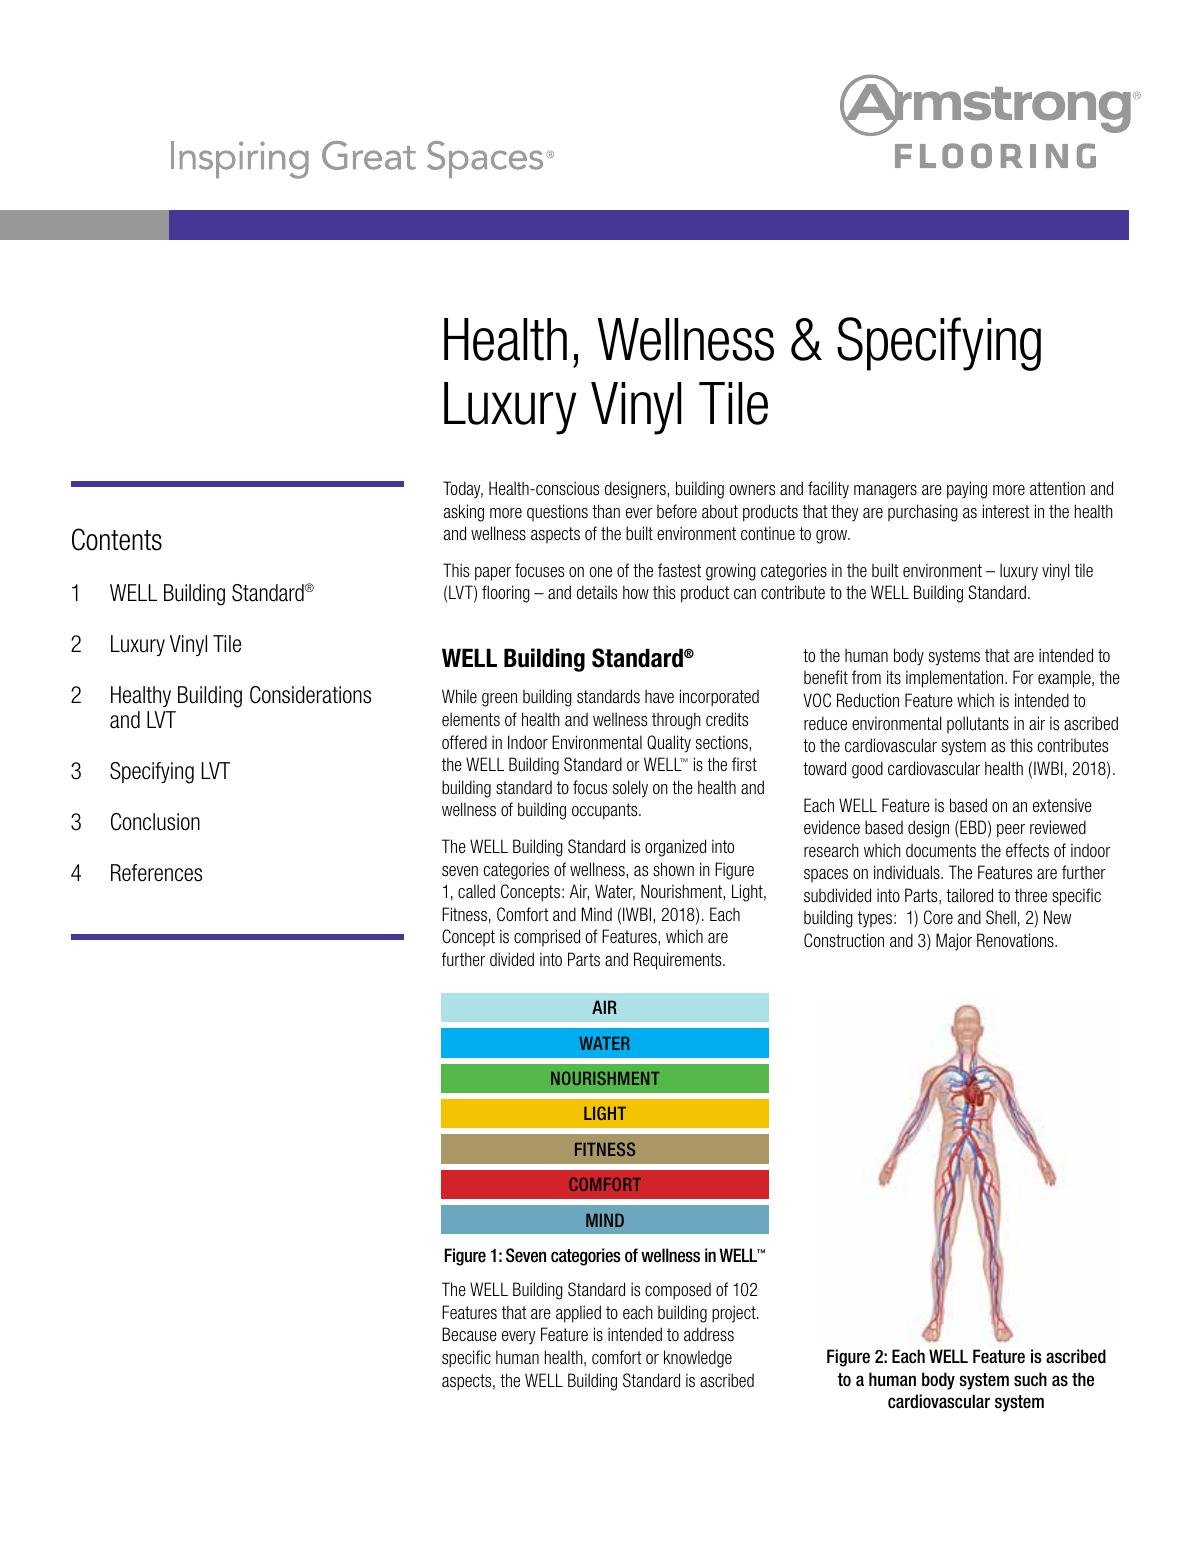 Health, Wellness & Specifying Luxury Vinyl Tile